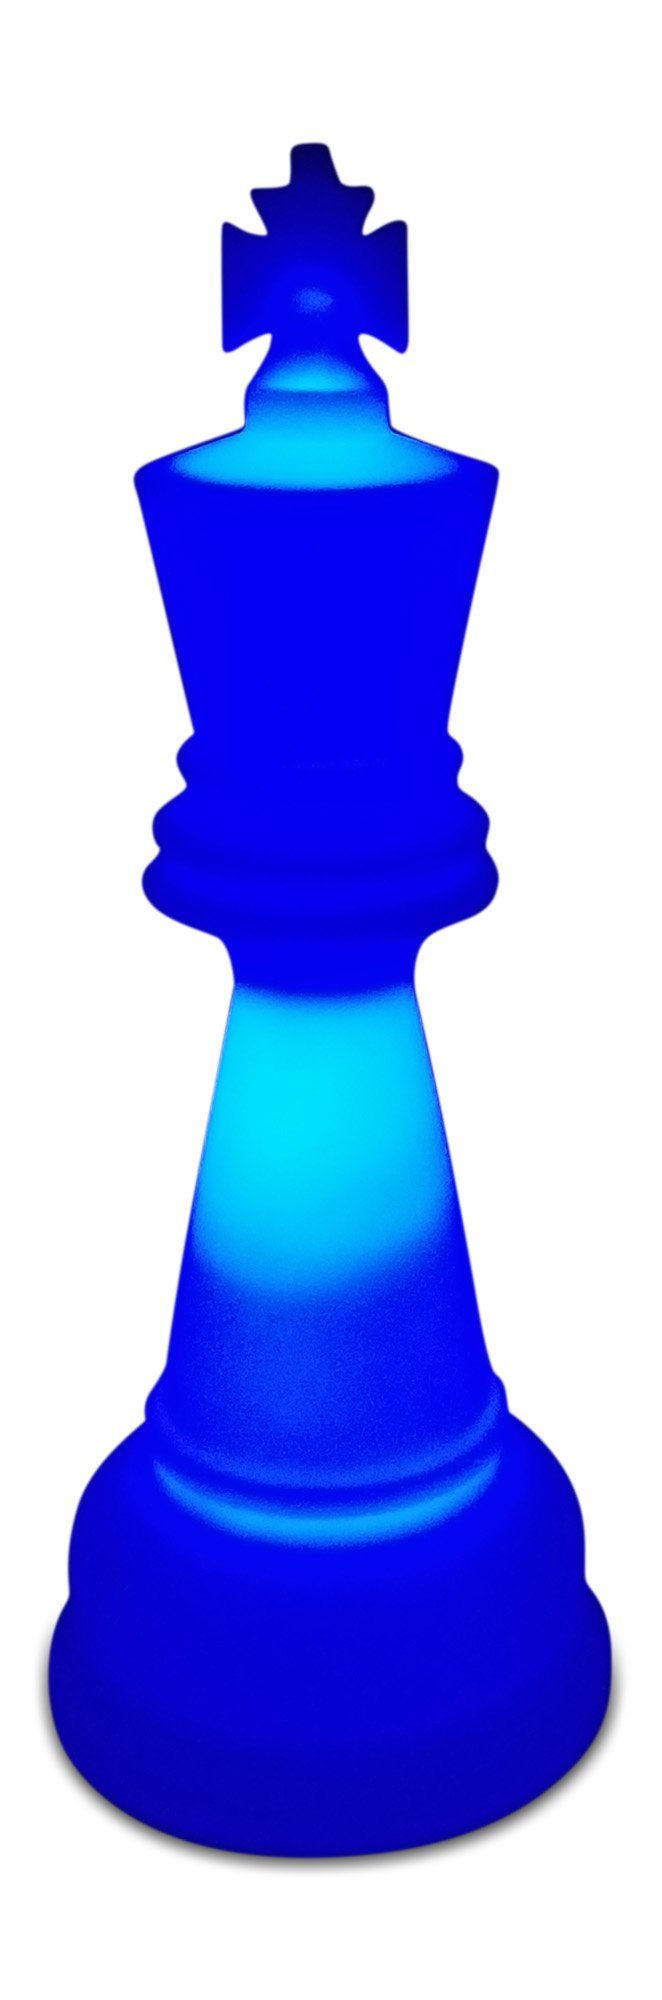 MegaChess - 48-Inch Blue Light Up King Chess Piece |  | MegaChess.com